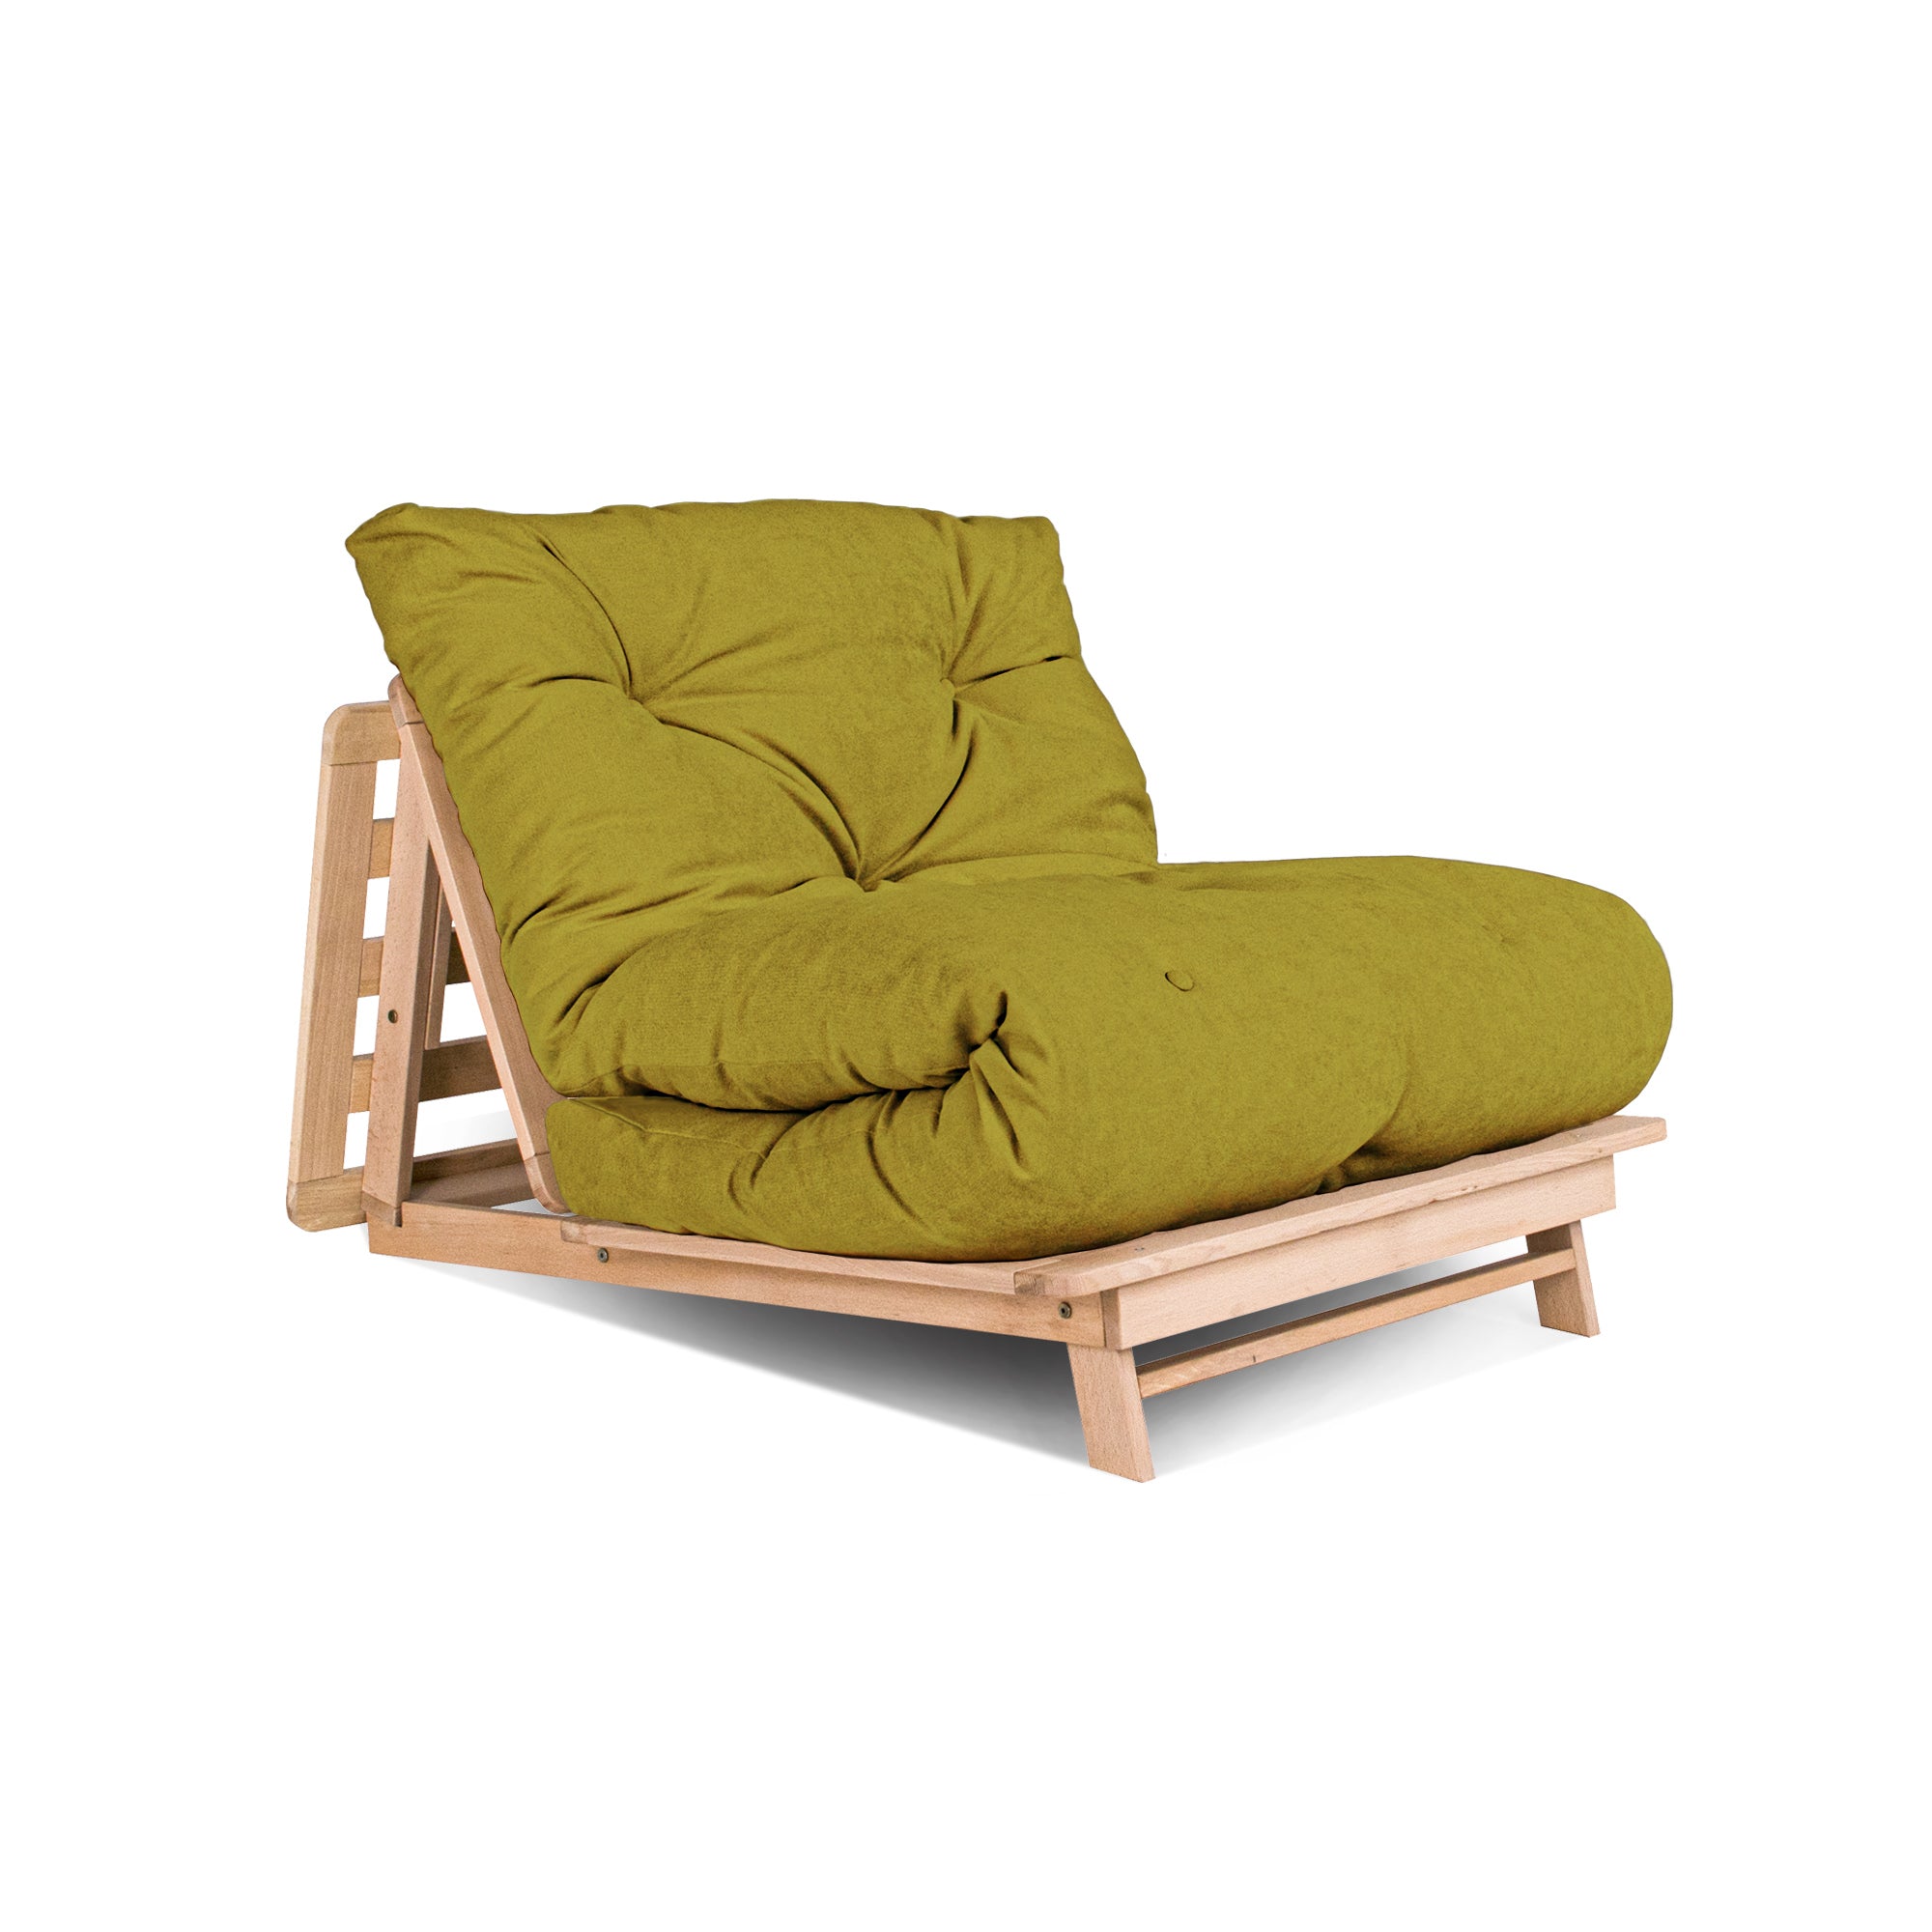 LAYTI-90 Futon Chair, Beech Wood Frame, Natural Colour-green fabric